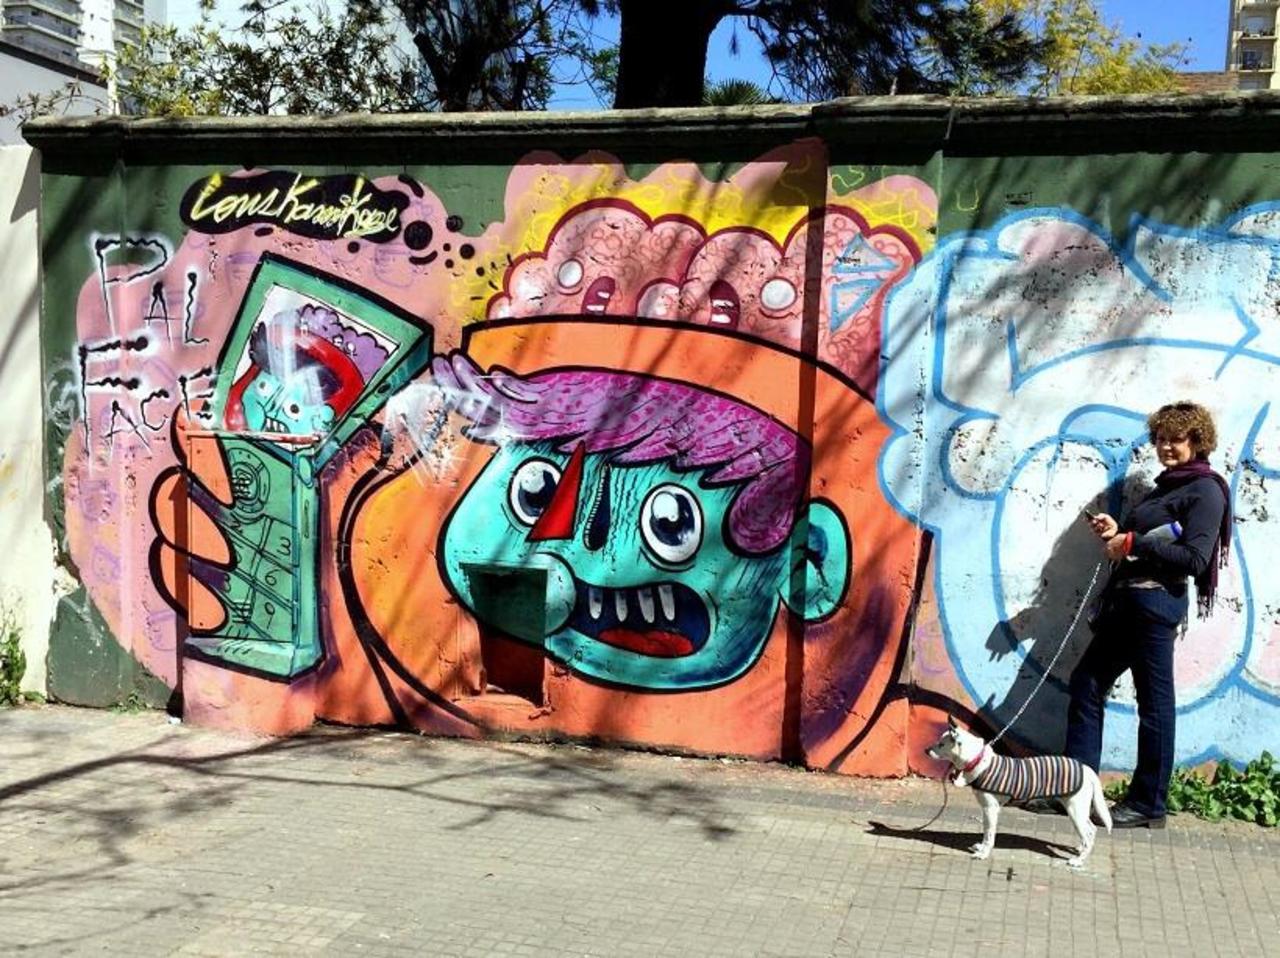 RT @DickieRandrup: #Graffiti de hoy: < The green little man, the lady & the dog> calles 47y9 #LaPlata #Argentina #StreetArt #UrbanArt http://t.co/cTcjrlkUgo